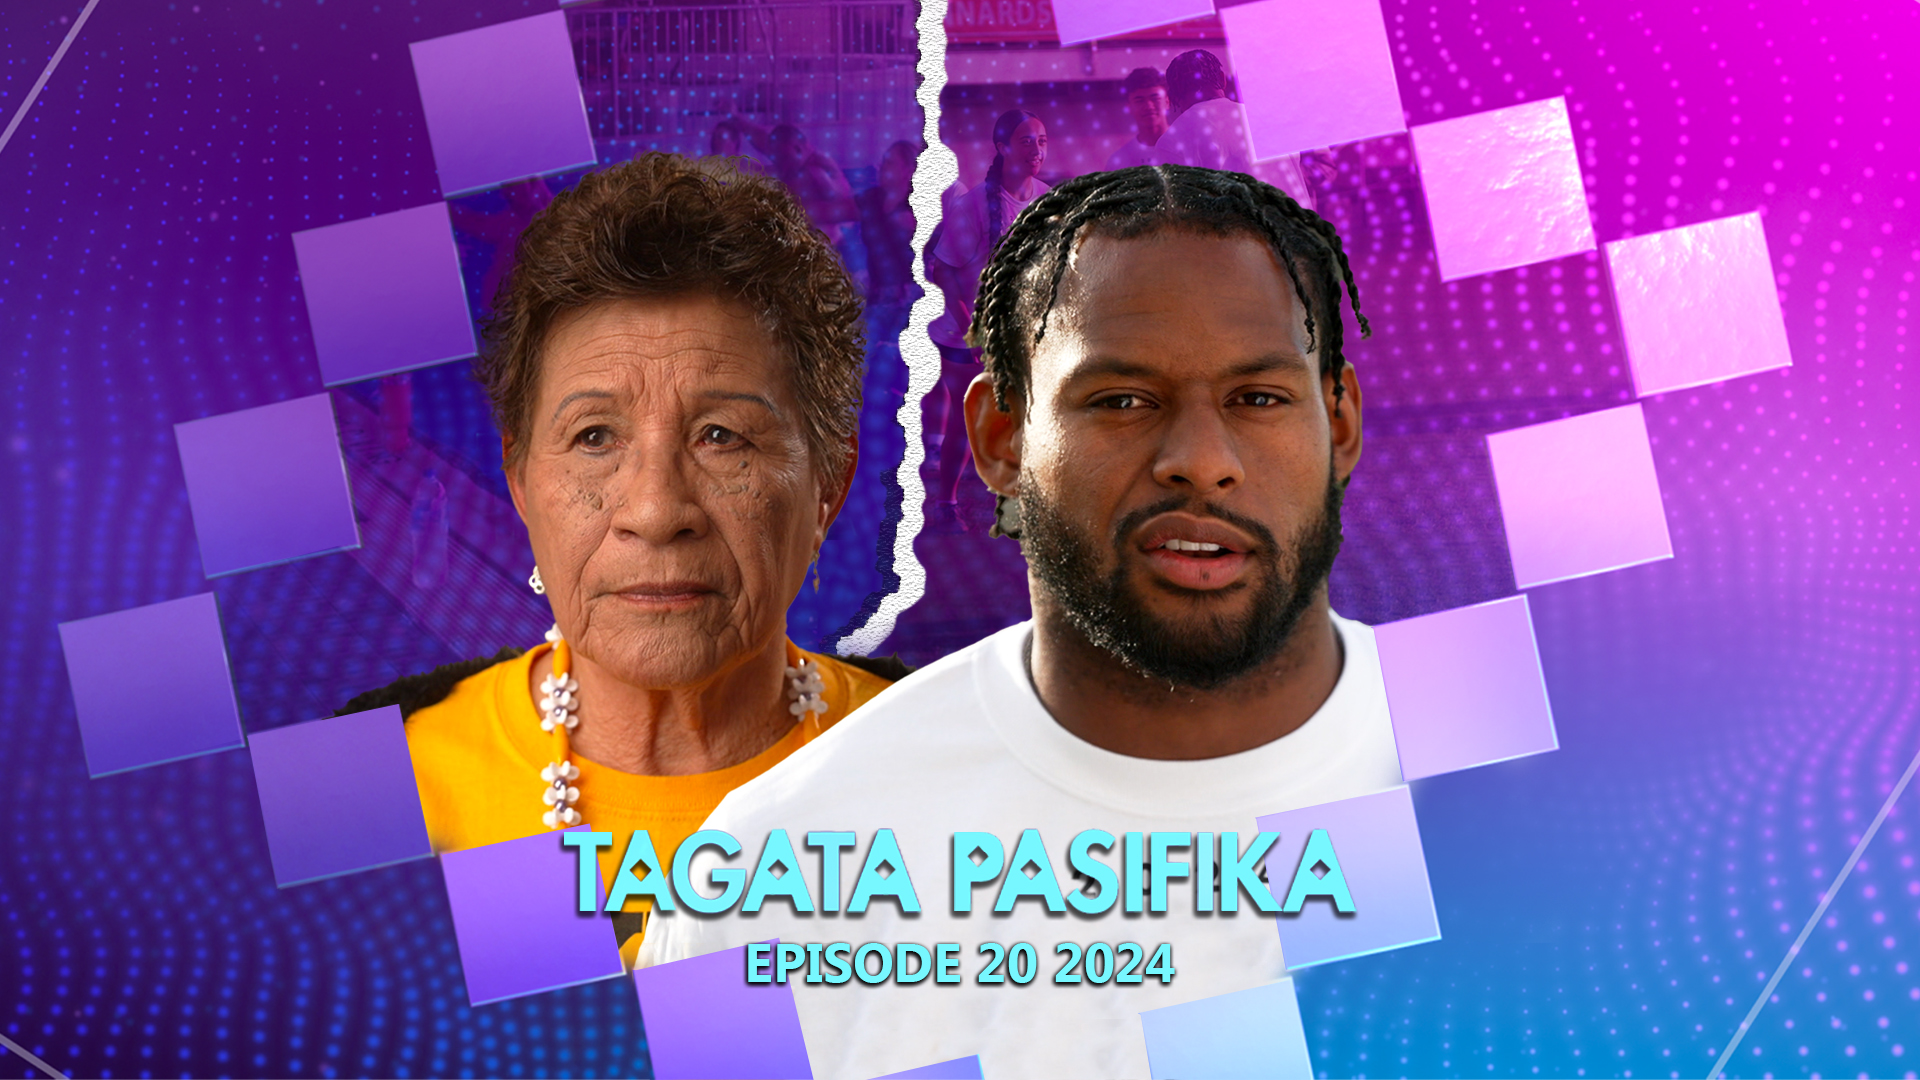 WATCH: Tagata Pasifika 2024 Episode 20